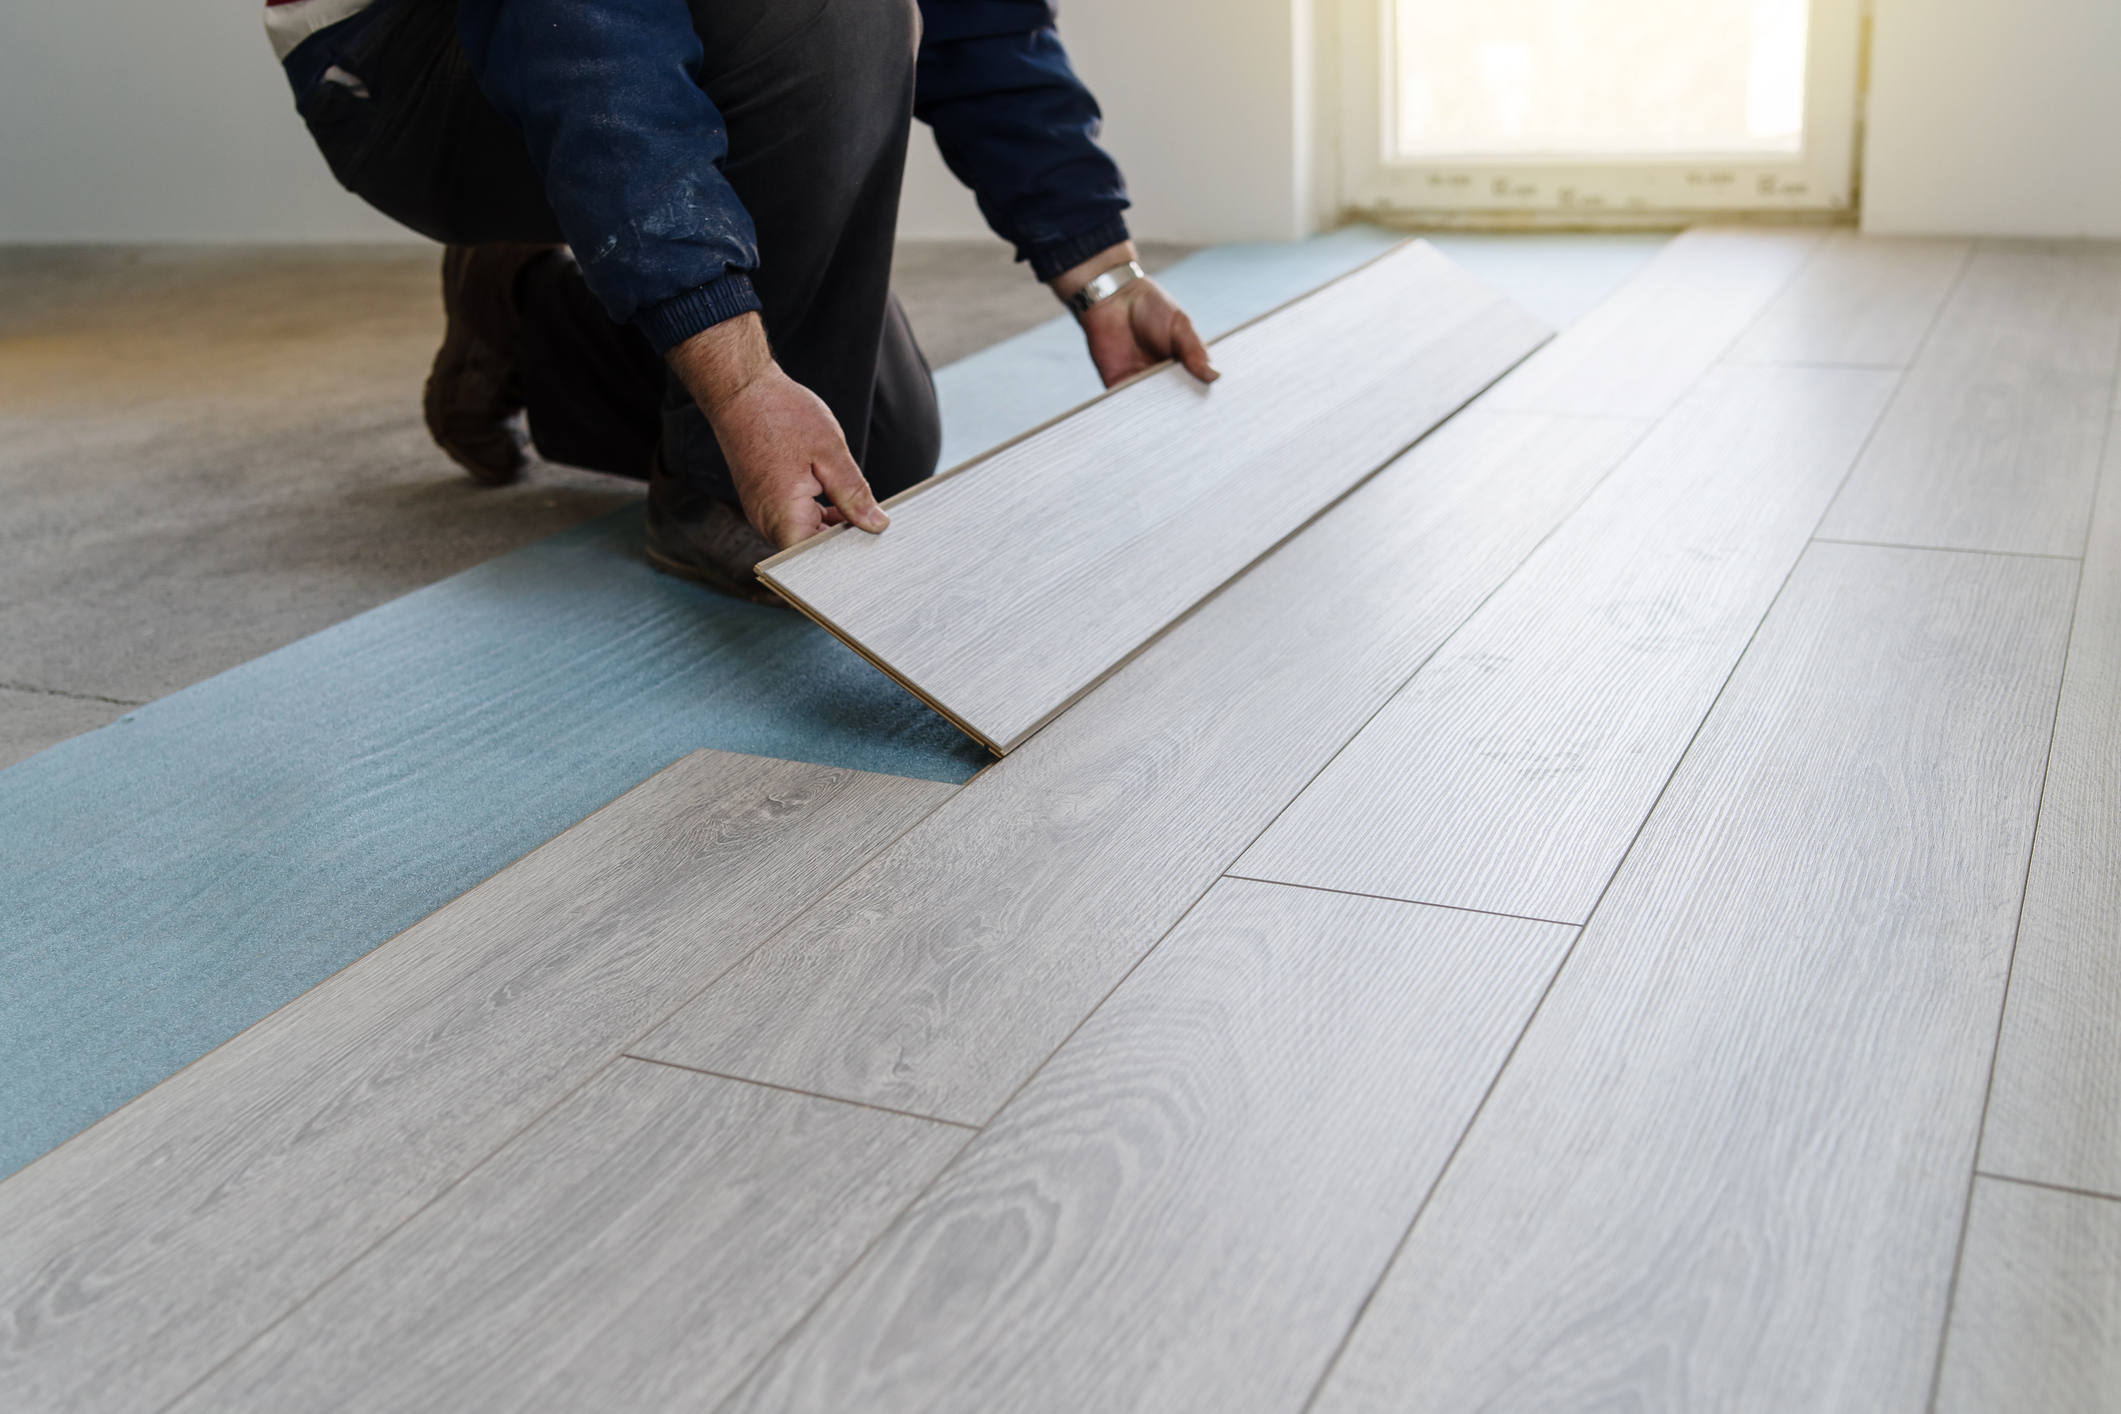 Easy Temporary Flooring Ideas, Laminate Wood Flooring Vs Hardwood Cost Philippines